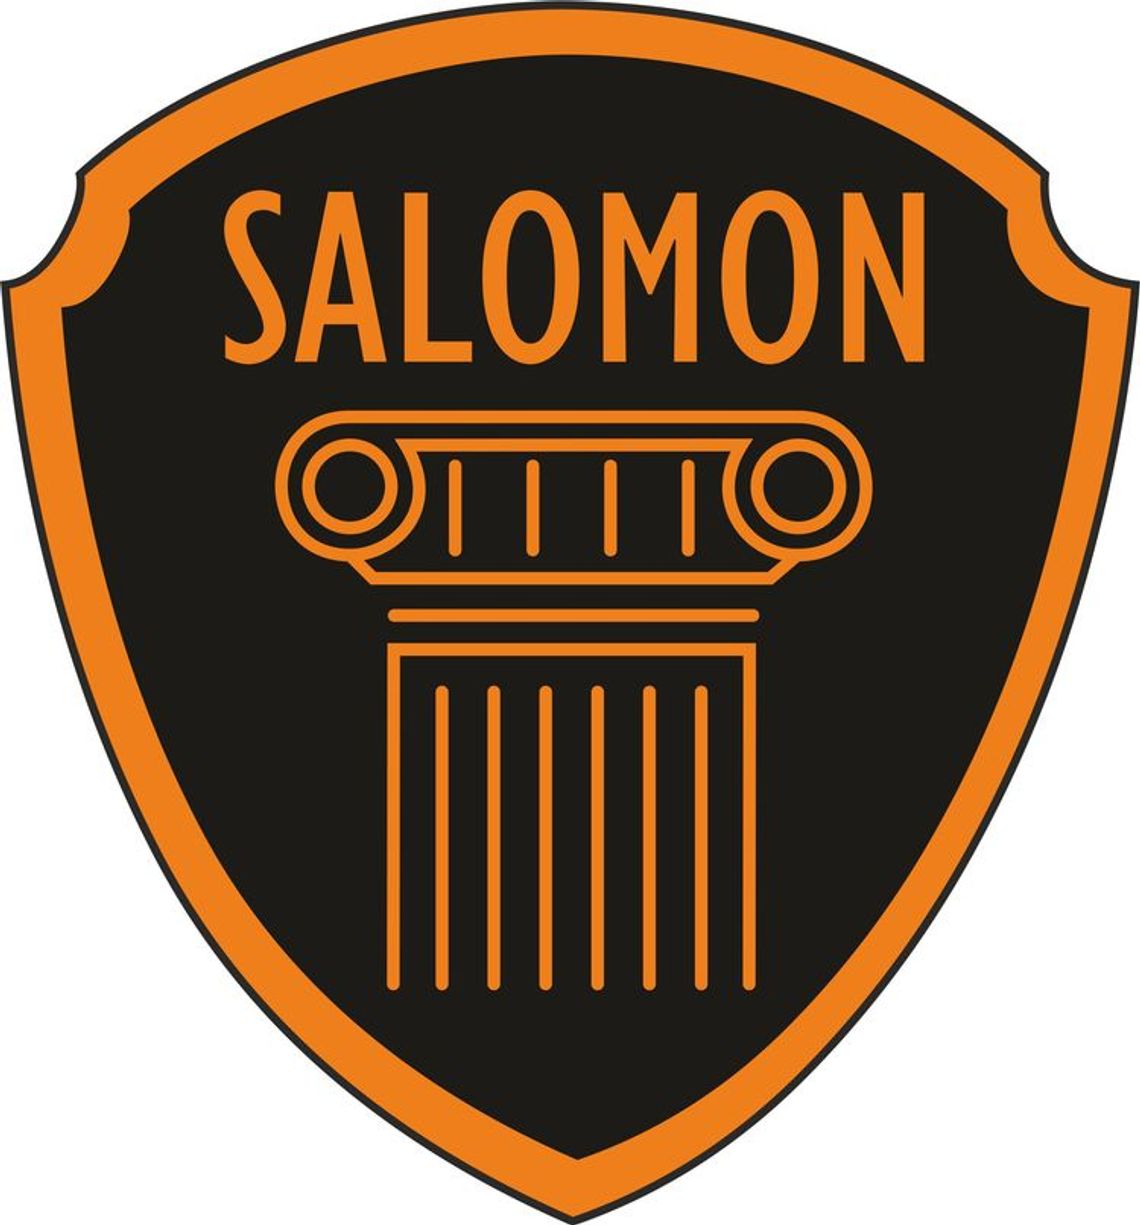 SALOMON Centrum szkoleniowo - doradcze